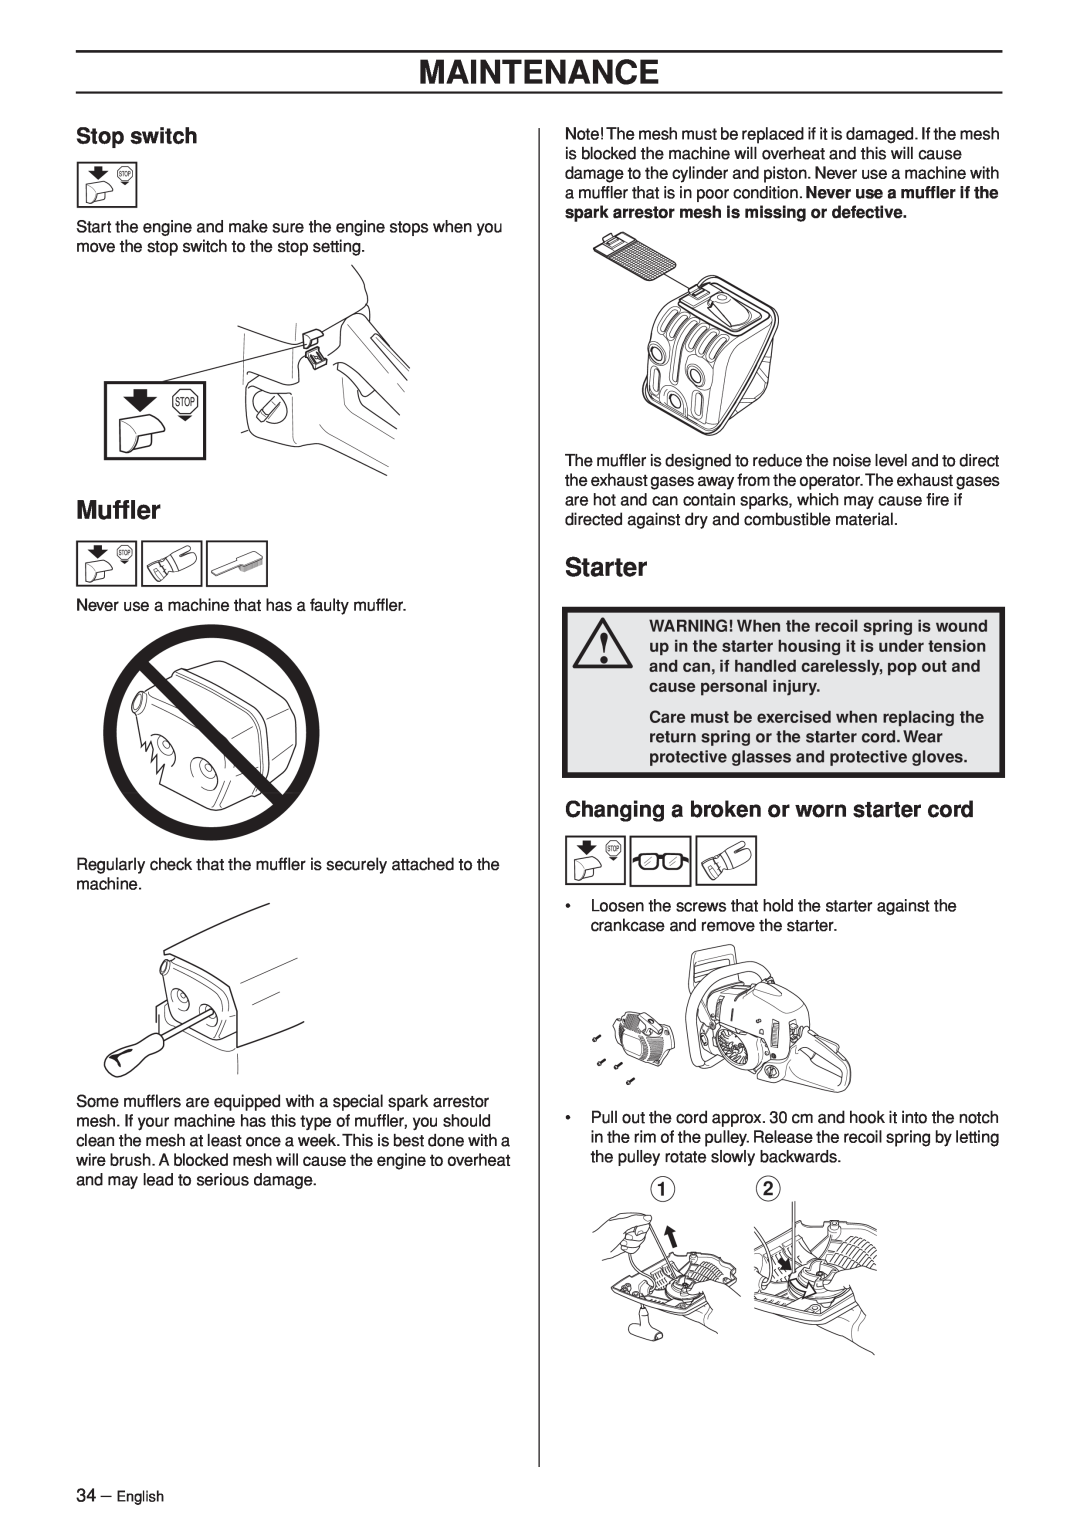 Husqvarna 455e, 455, 460 manual Mufﬂer, Starter, Changing a broken or worn starter cord, Maintenance, Stop switch 